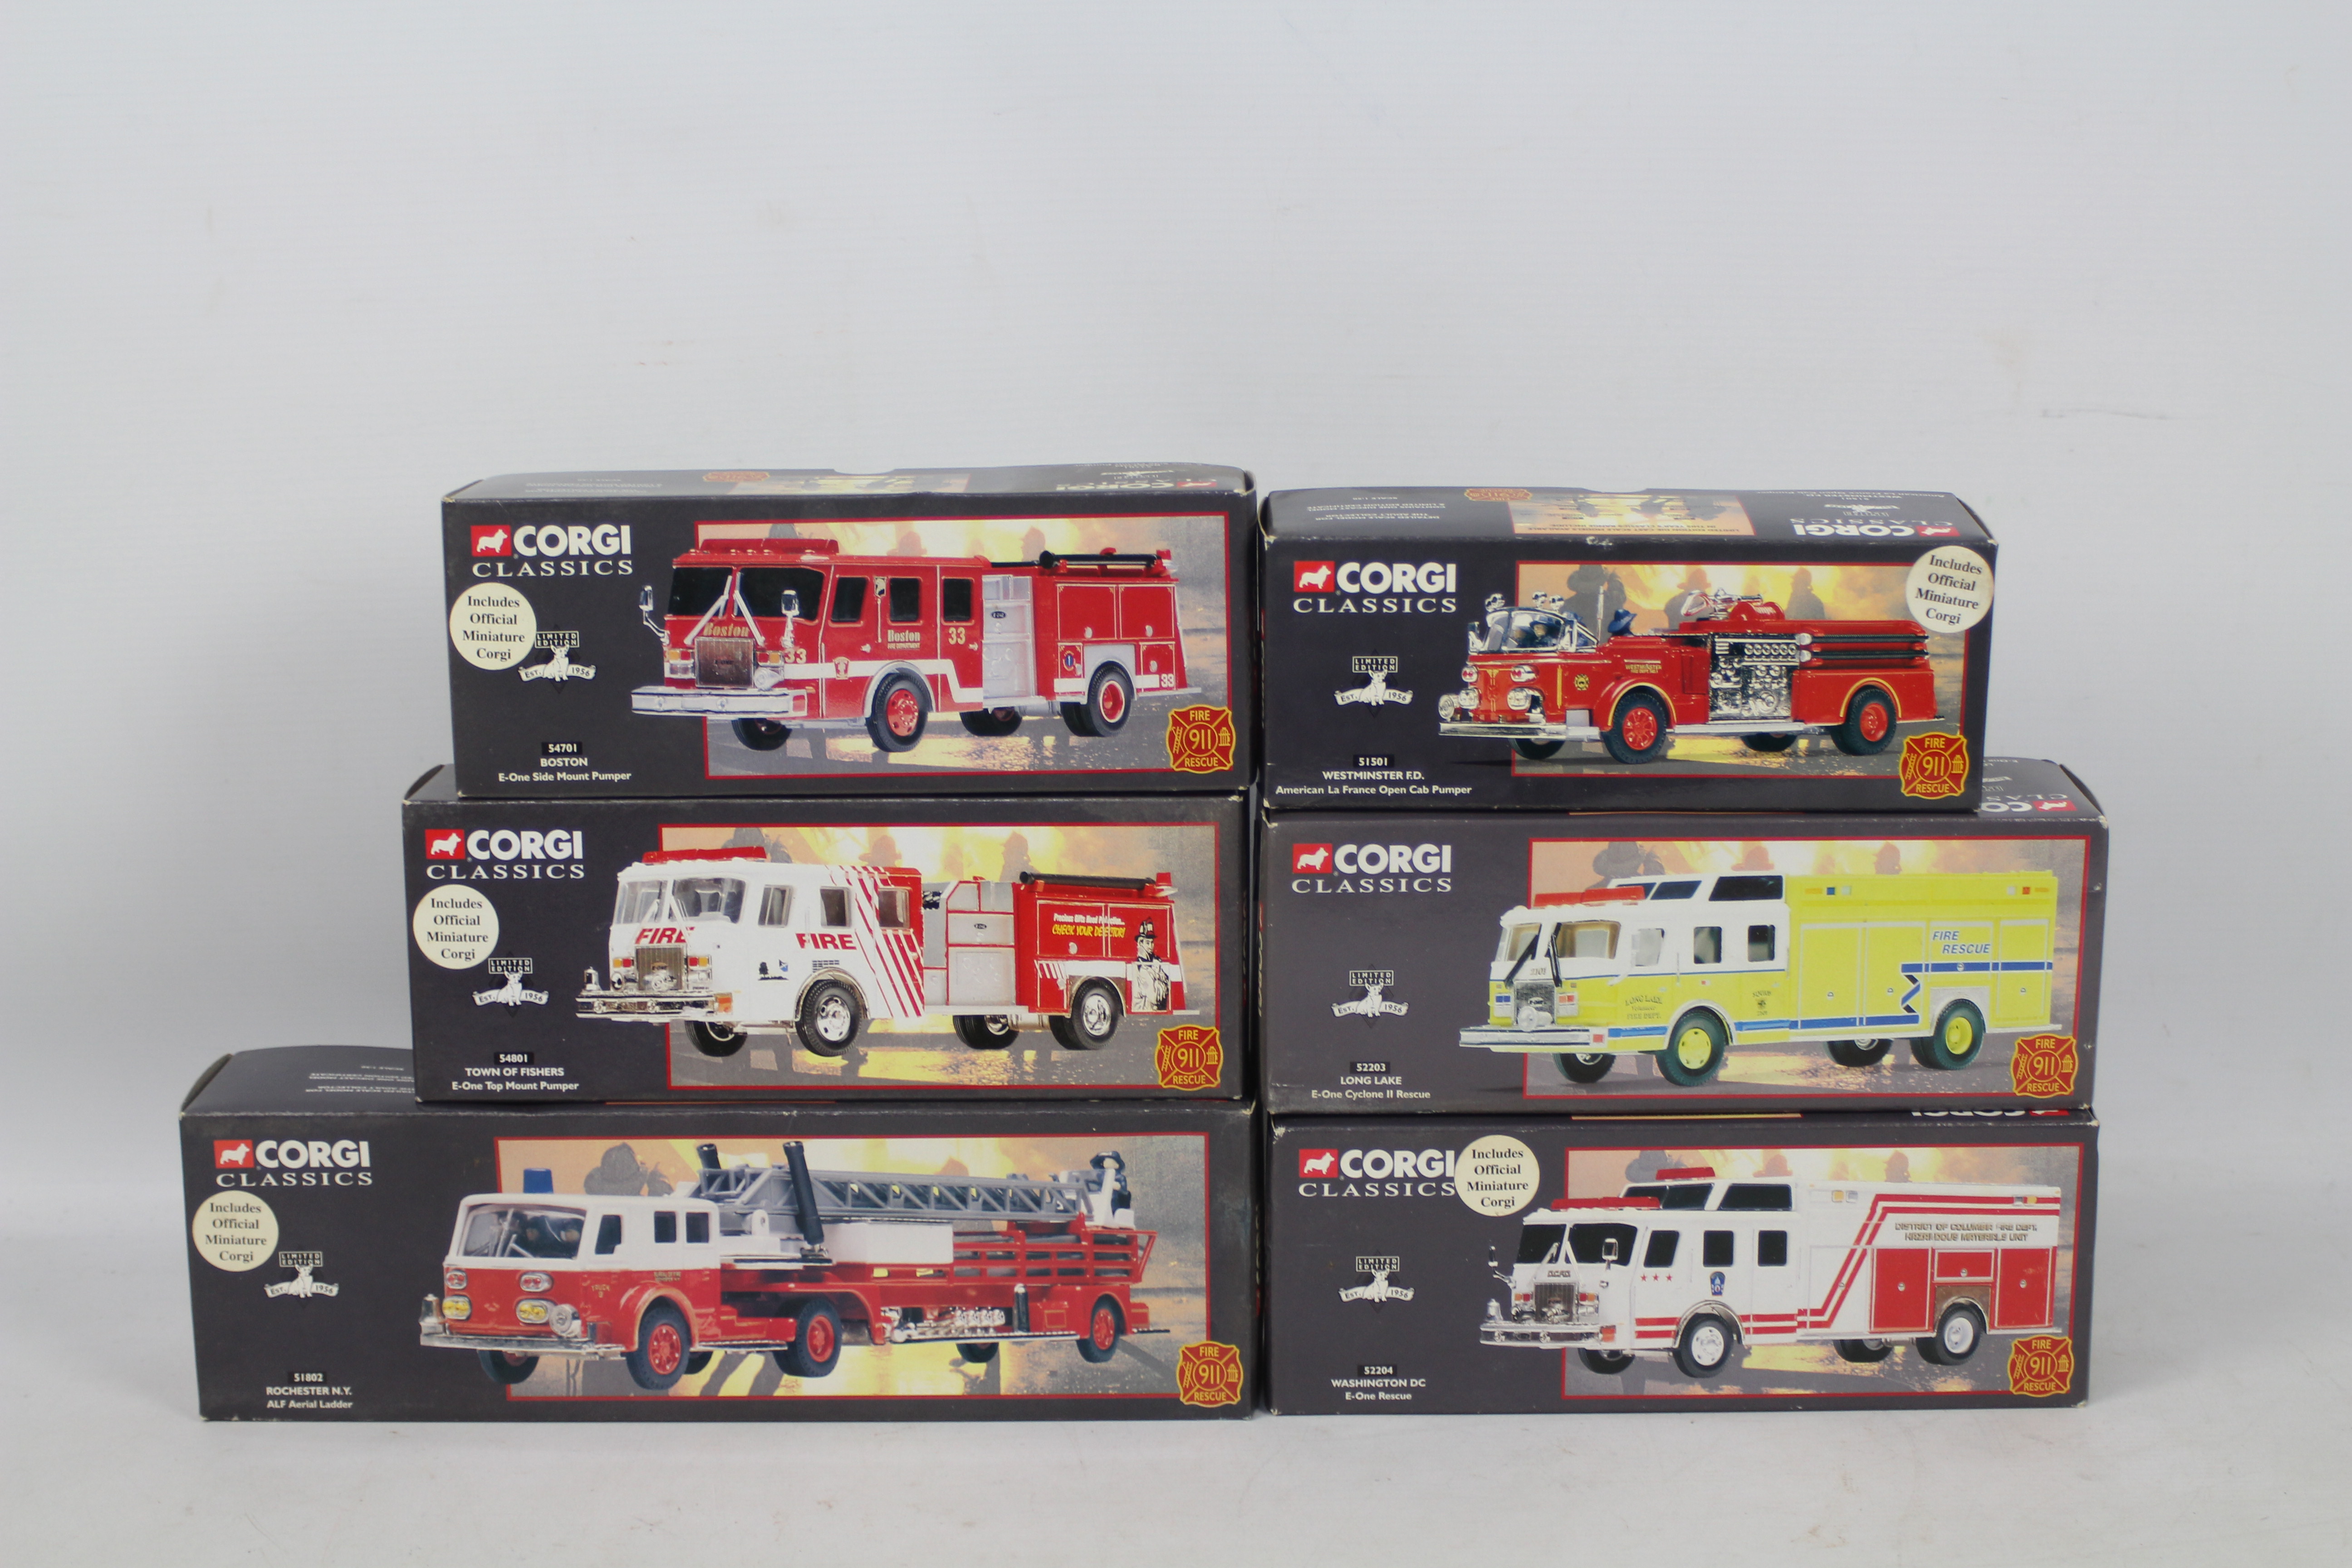 Corgi Classics - Six boxed Limited Edition diecast US Fire Appliances from the Corgi 911 Fire